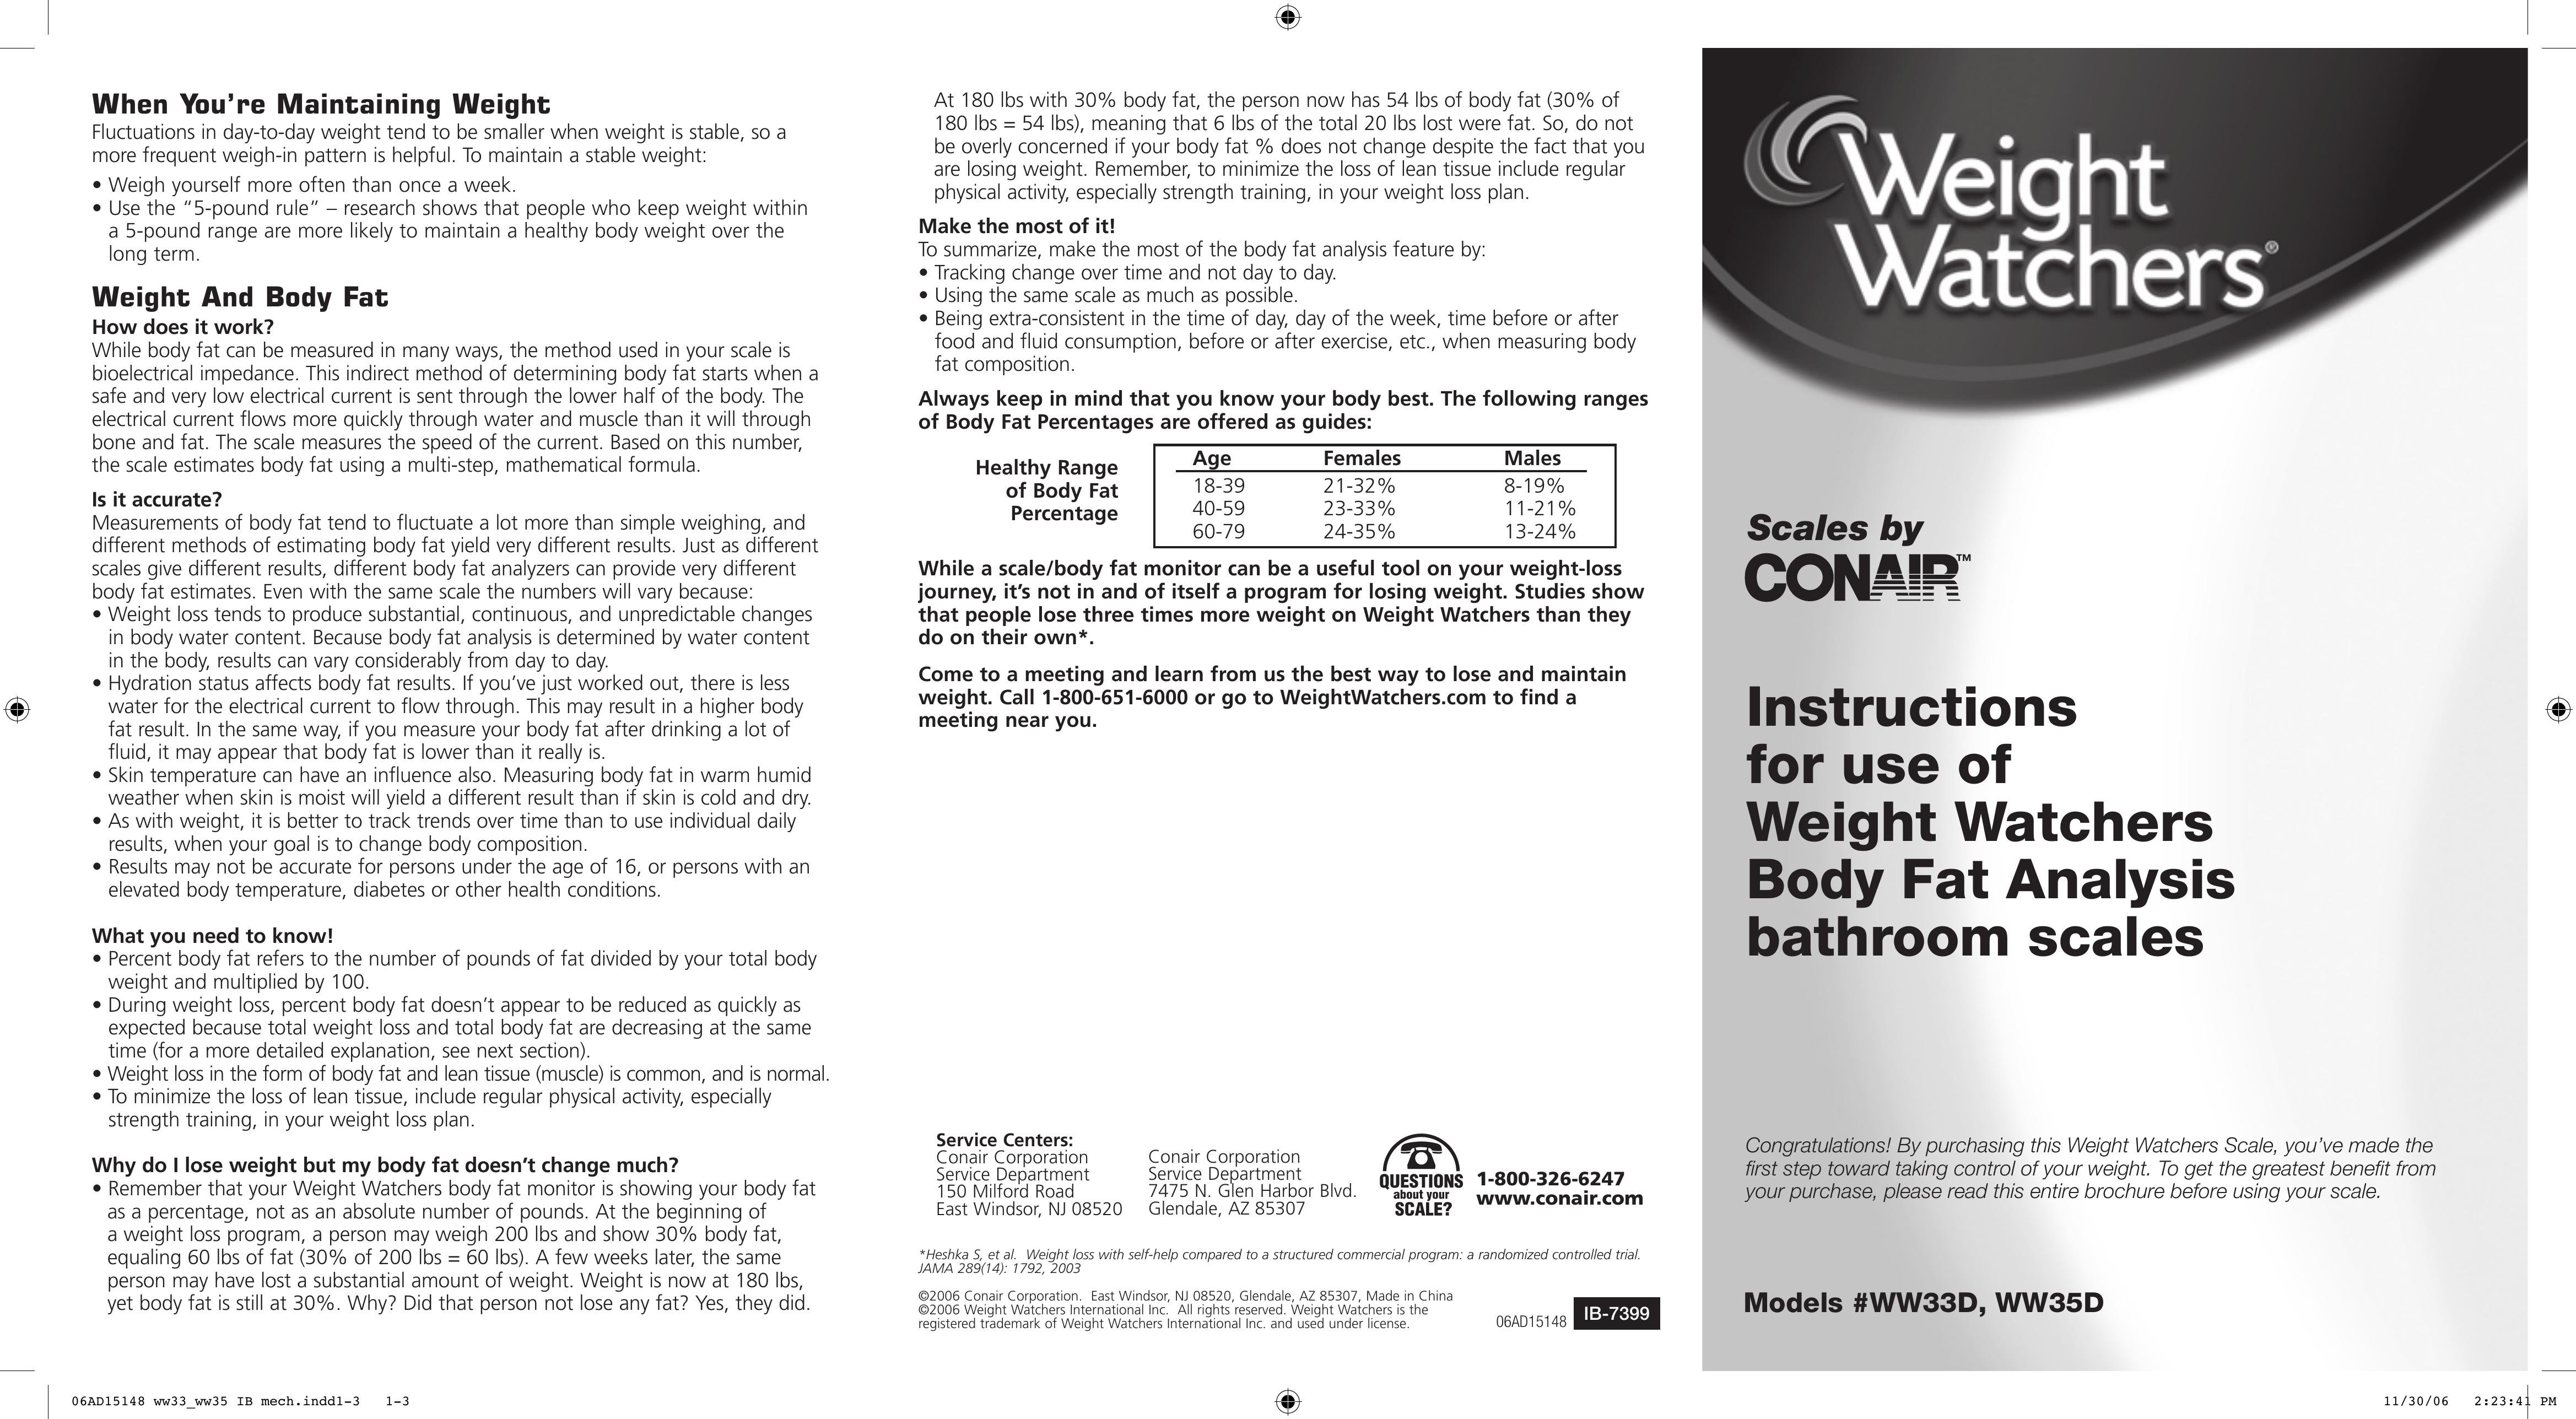 Conair WW35D Scale User Manual